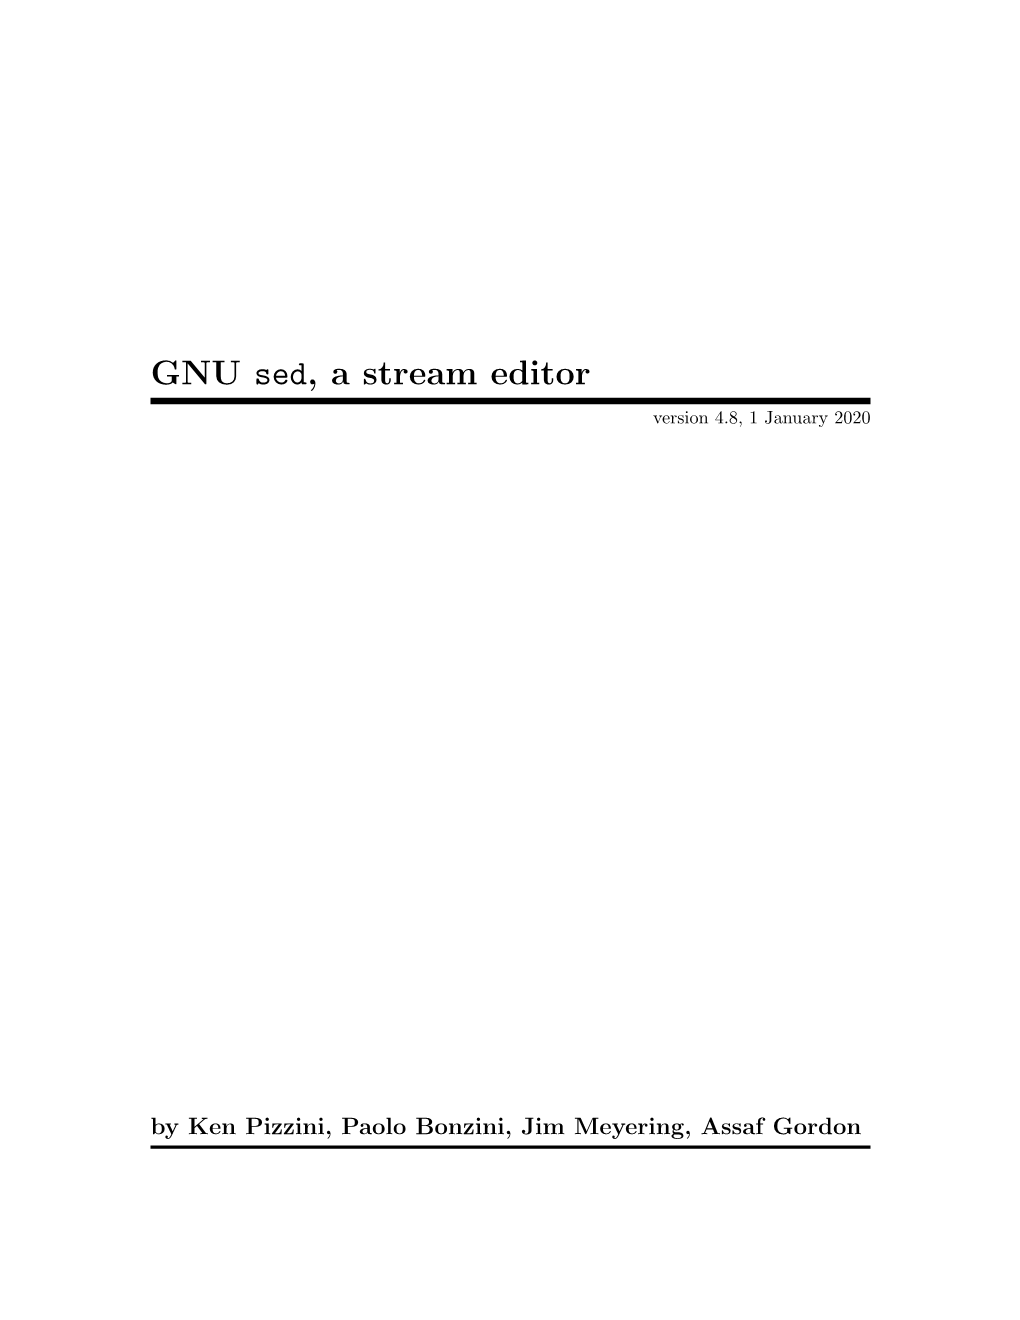 GNU Sed, a Stream Editor Version 4.8, 1 January 2020